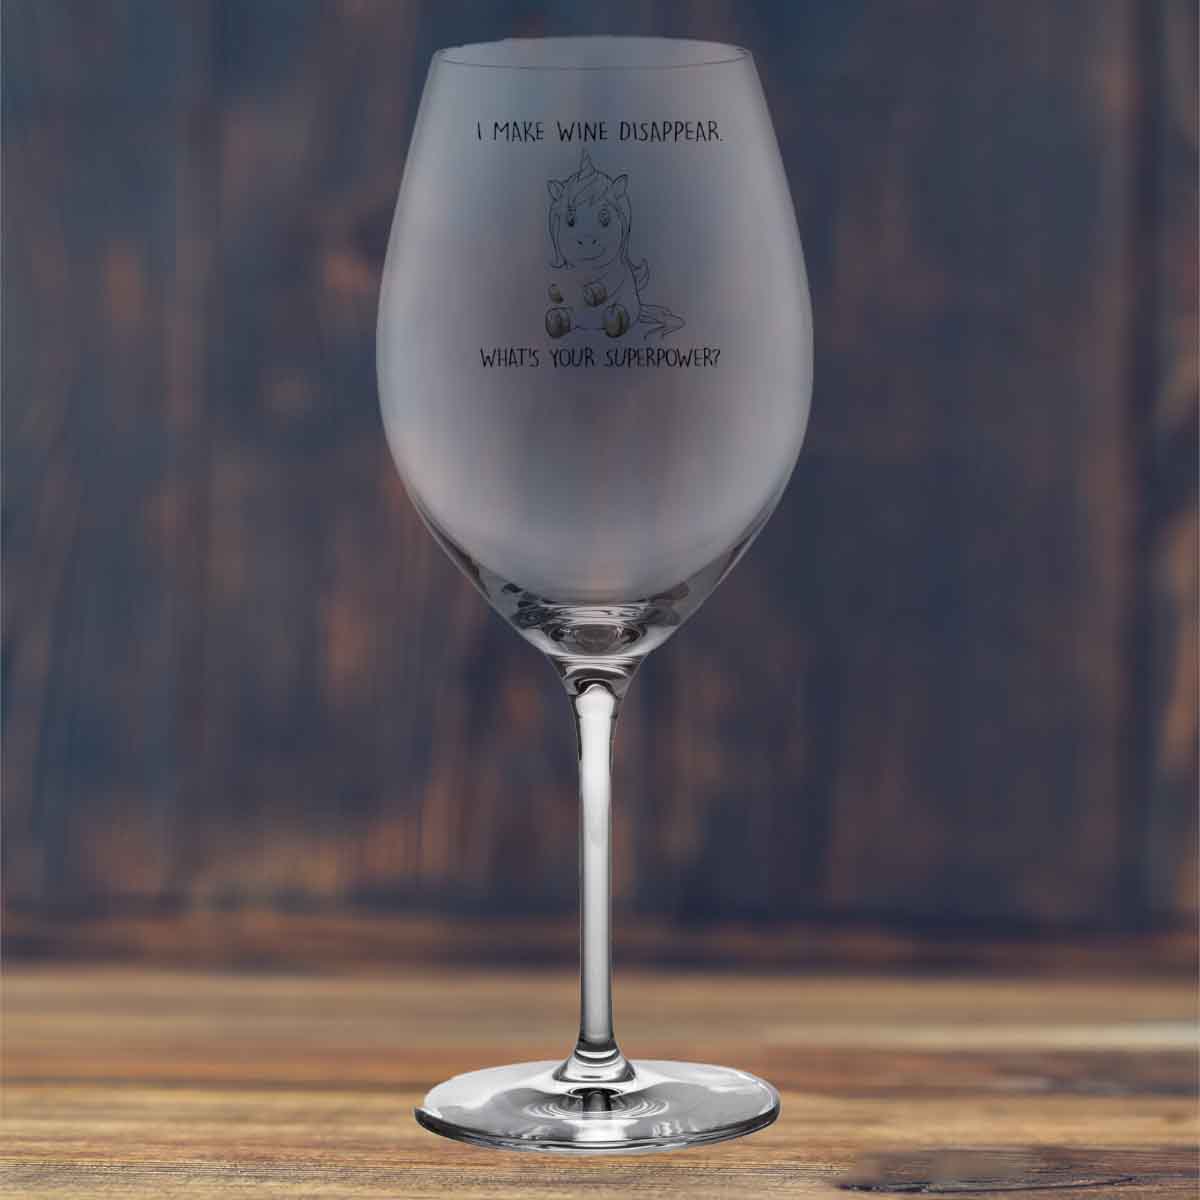 Disappear Winecorn - Wine glass